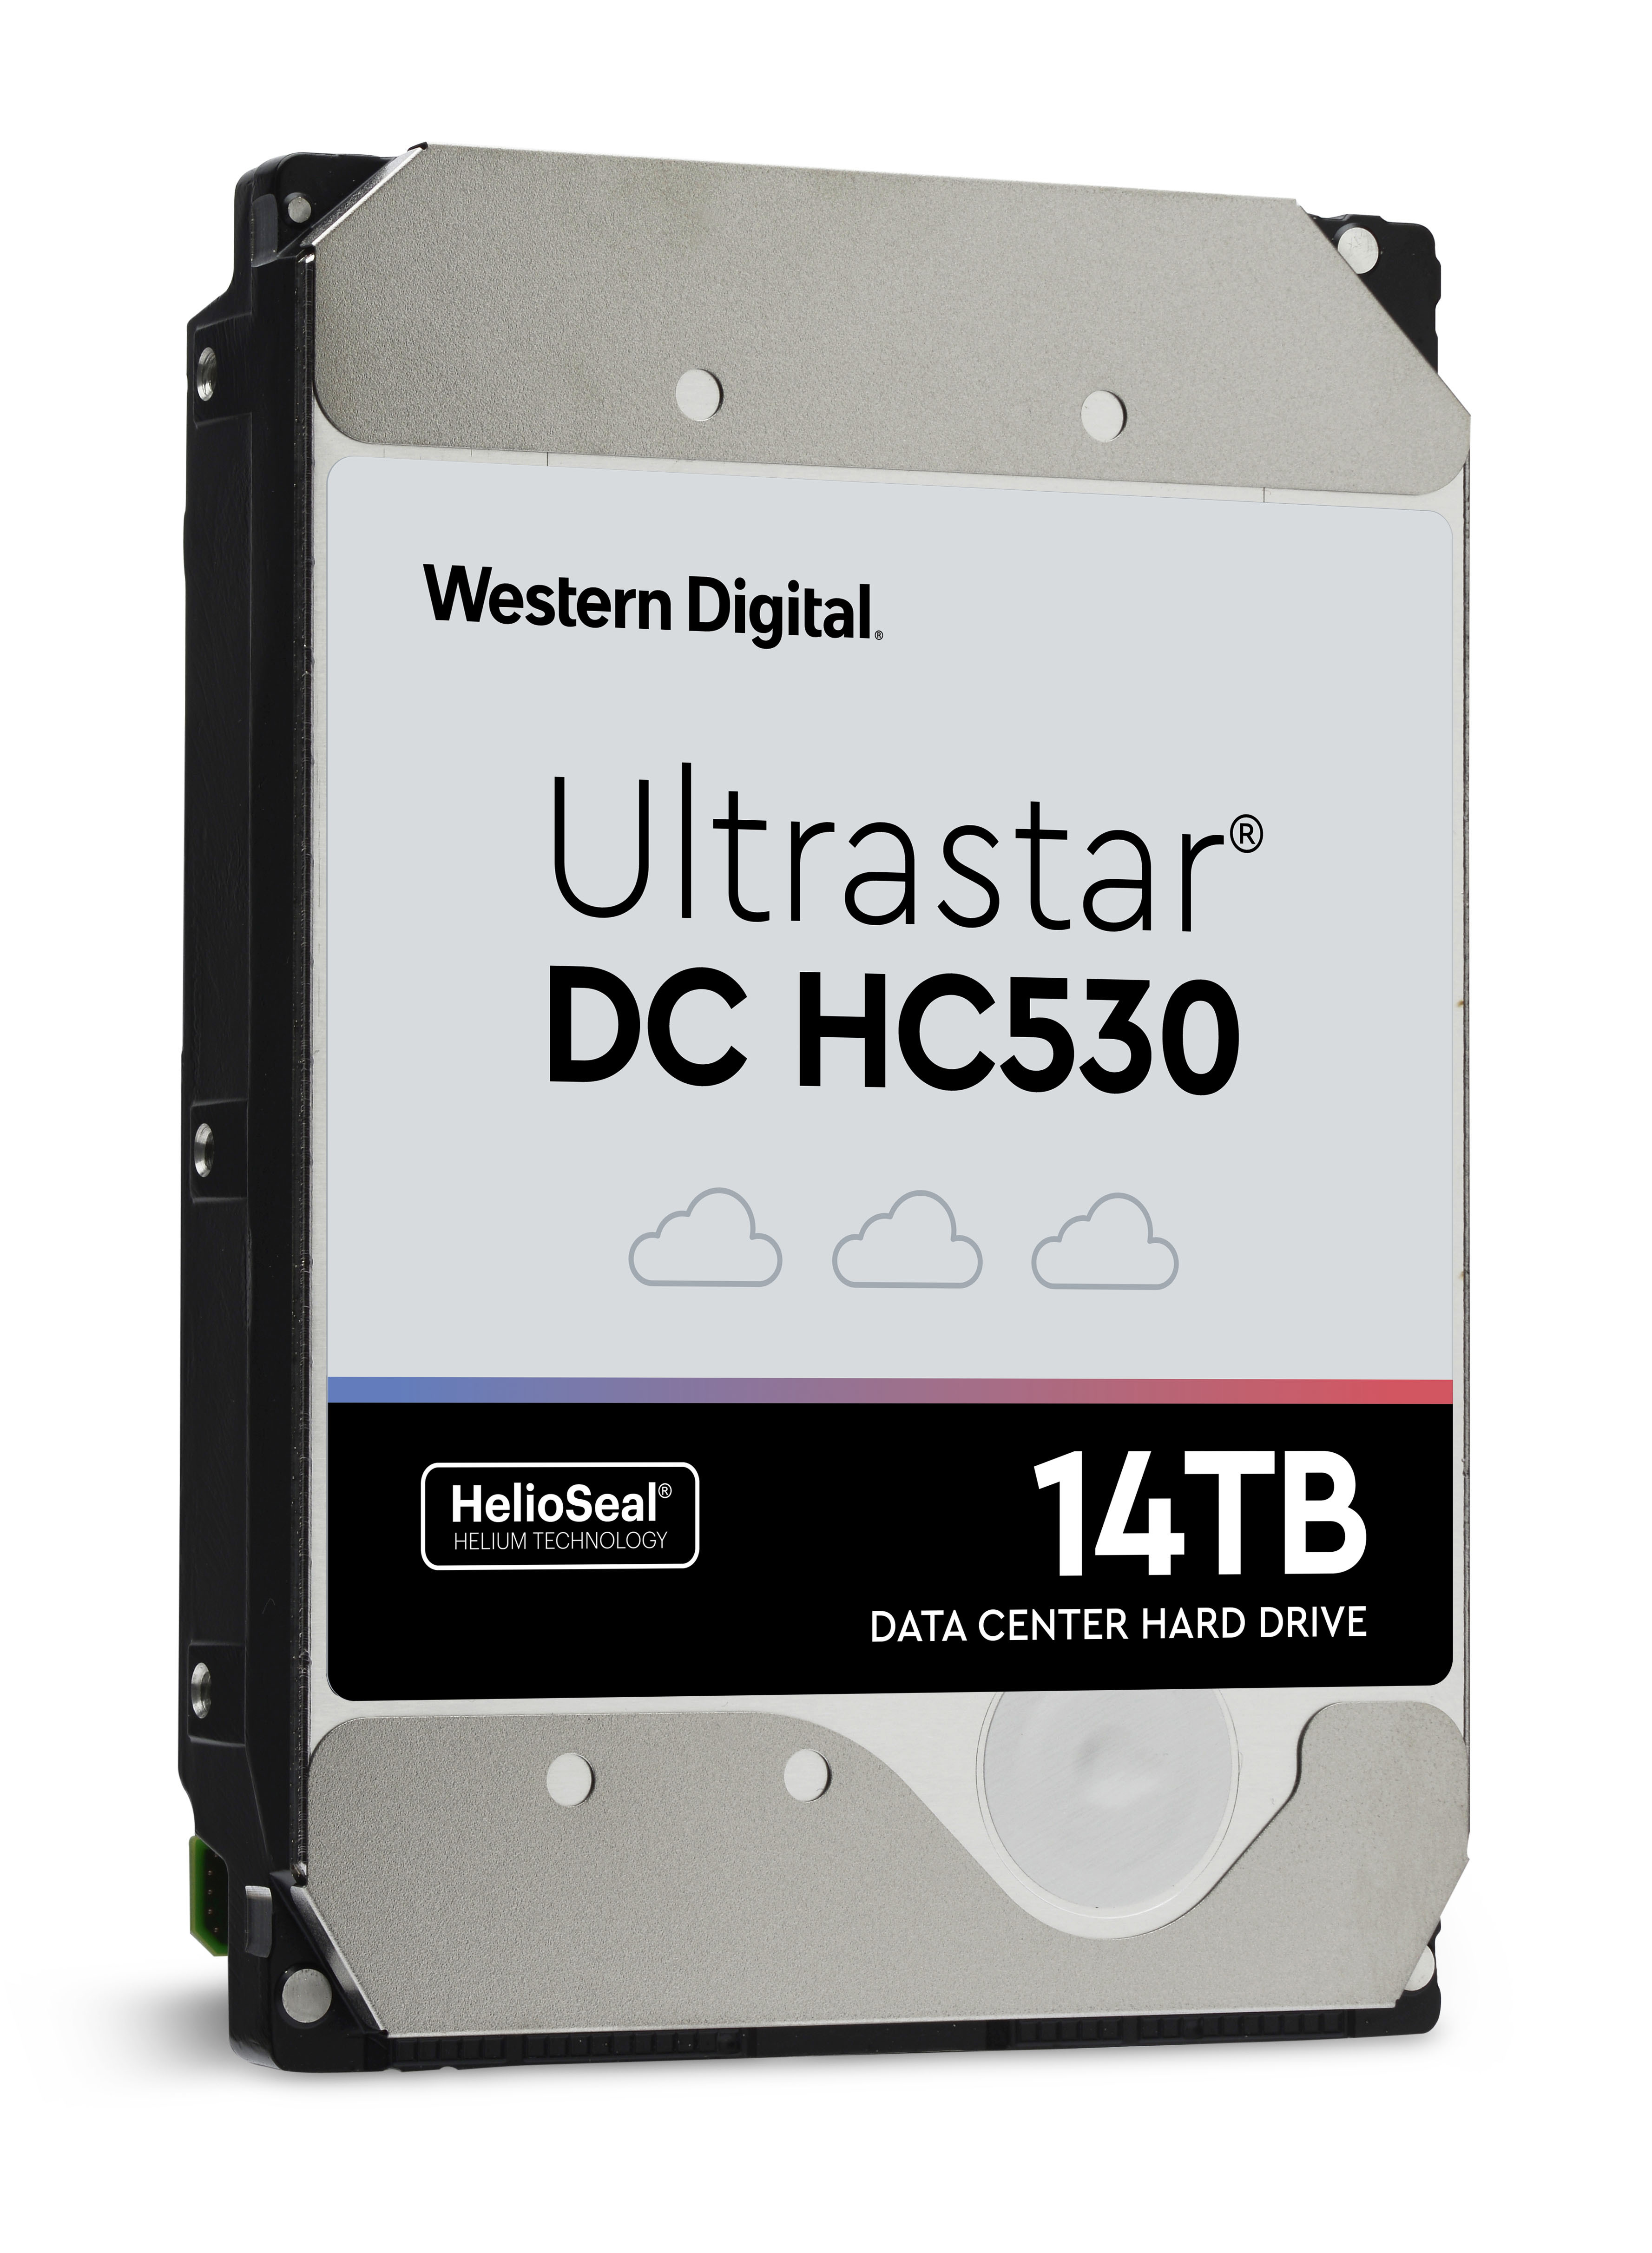 Western Digitals Ultrastar DC HC530 hard drive